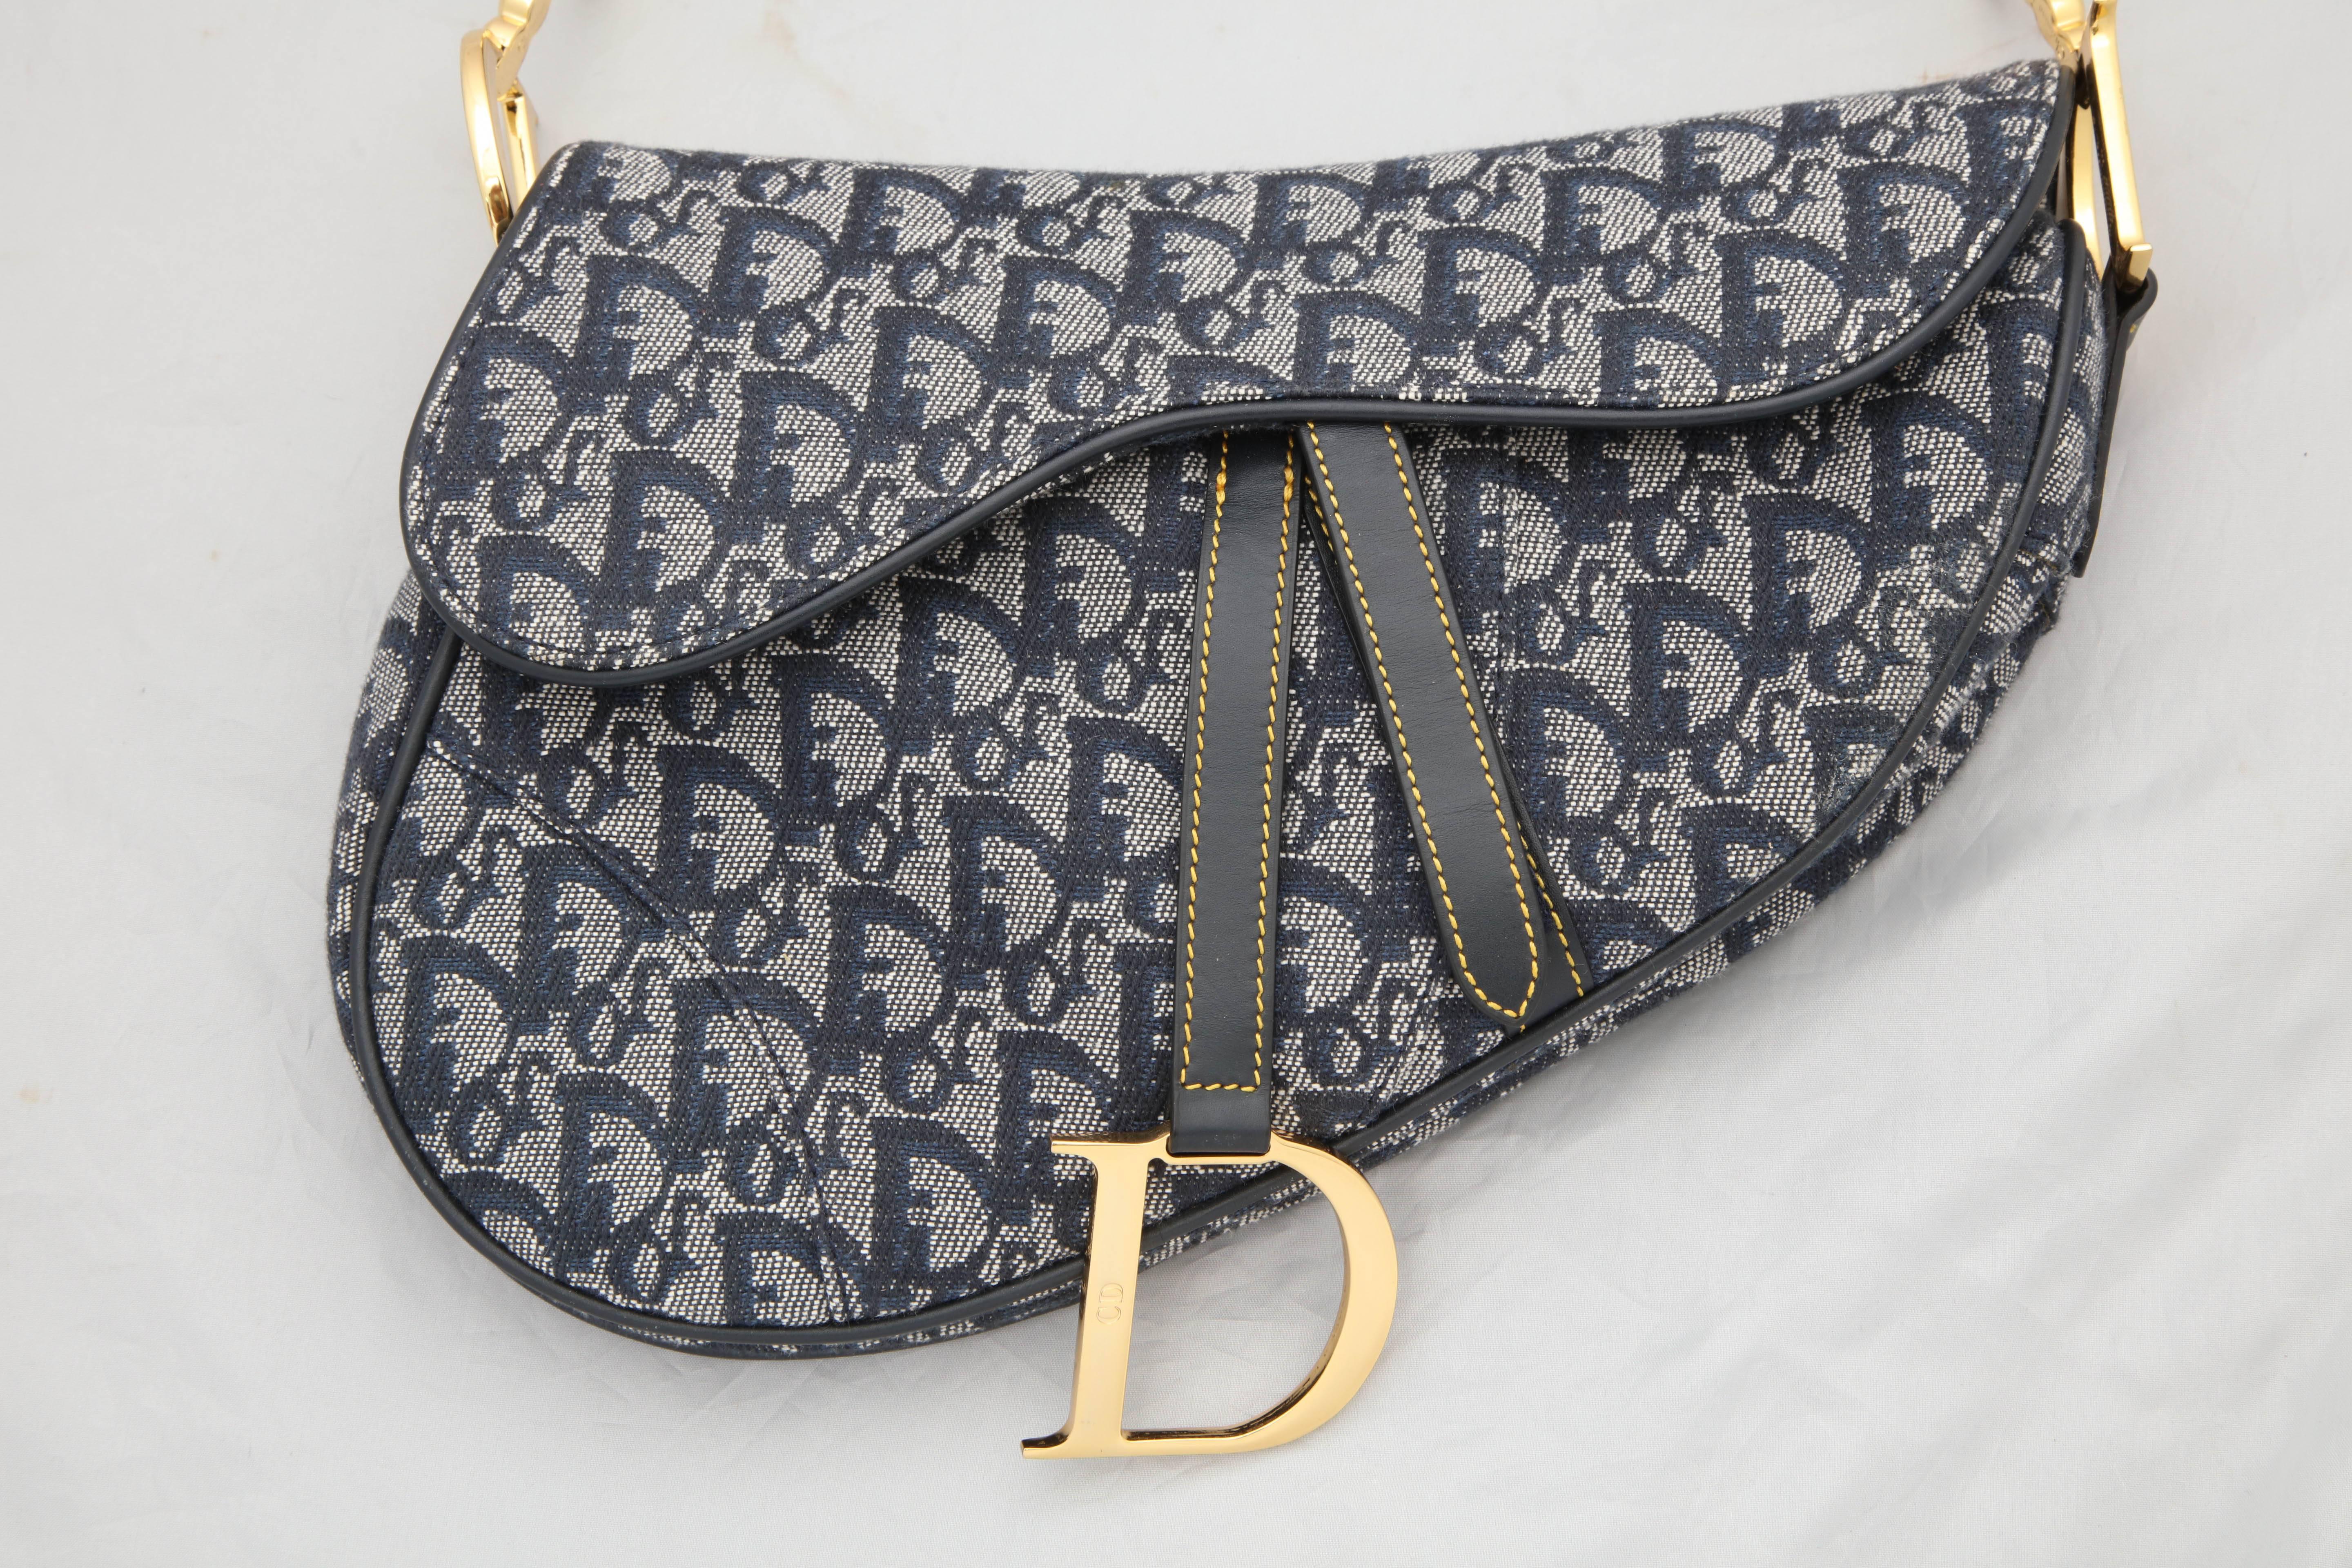 Christian Dior by John Galliano iconic saddle bag with Dior logos. 